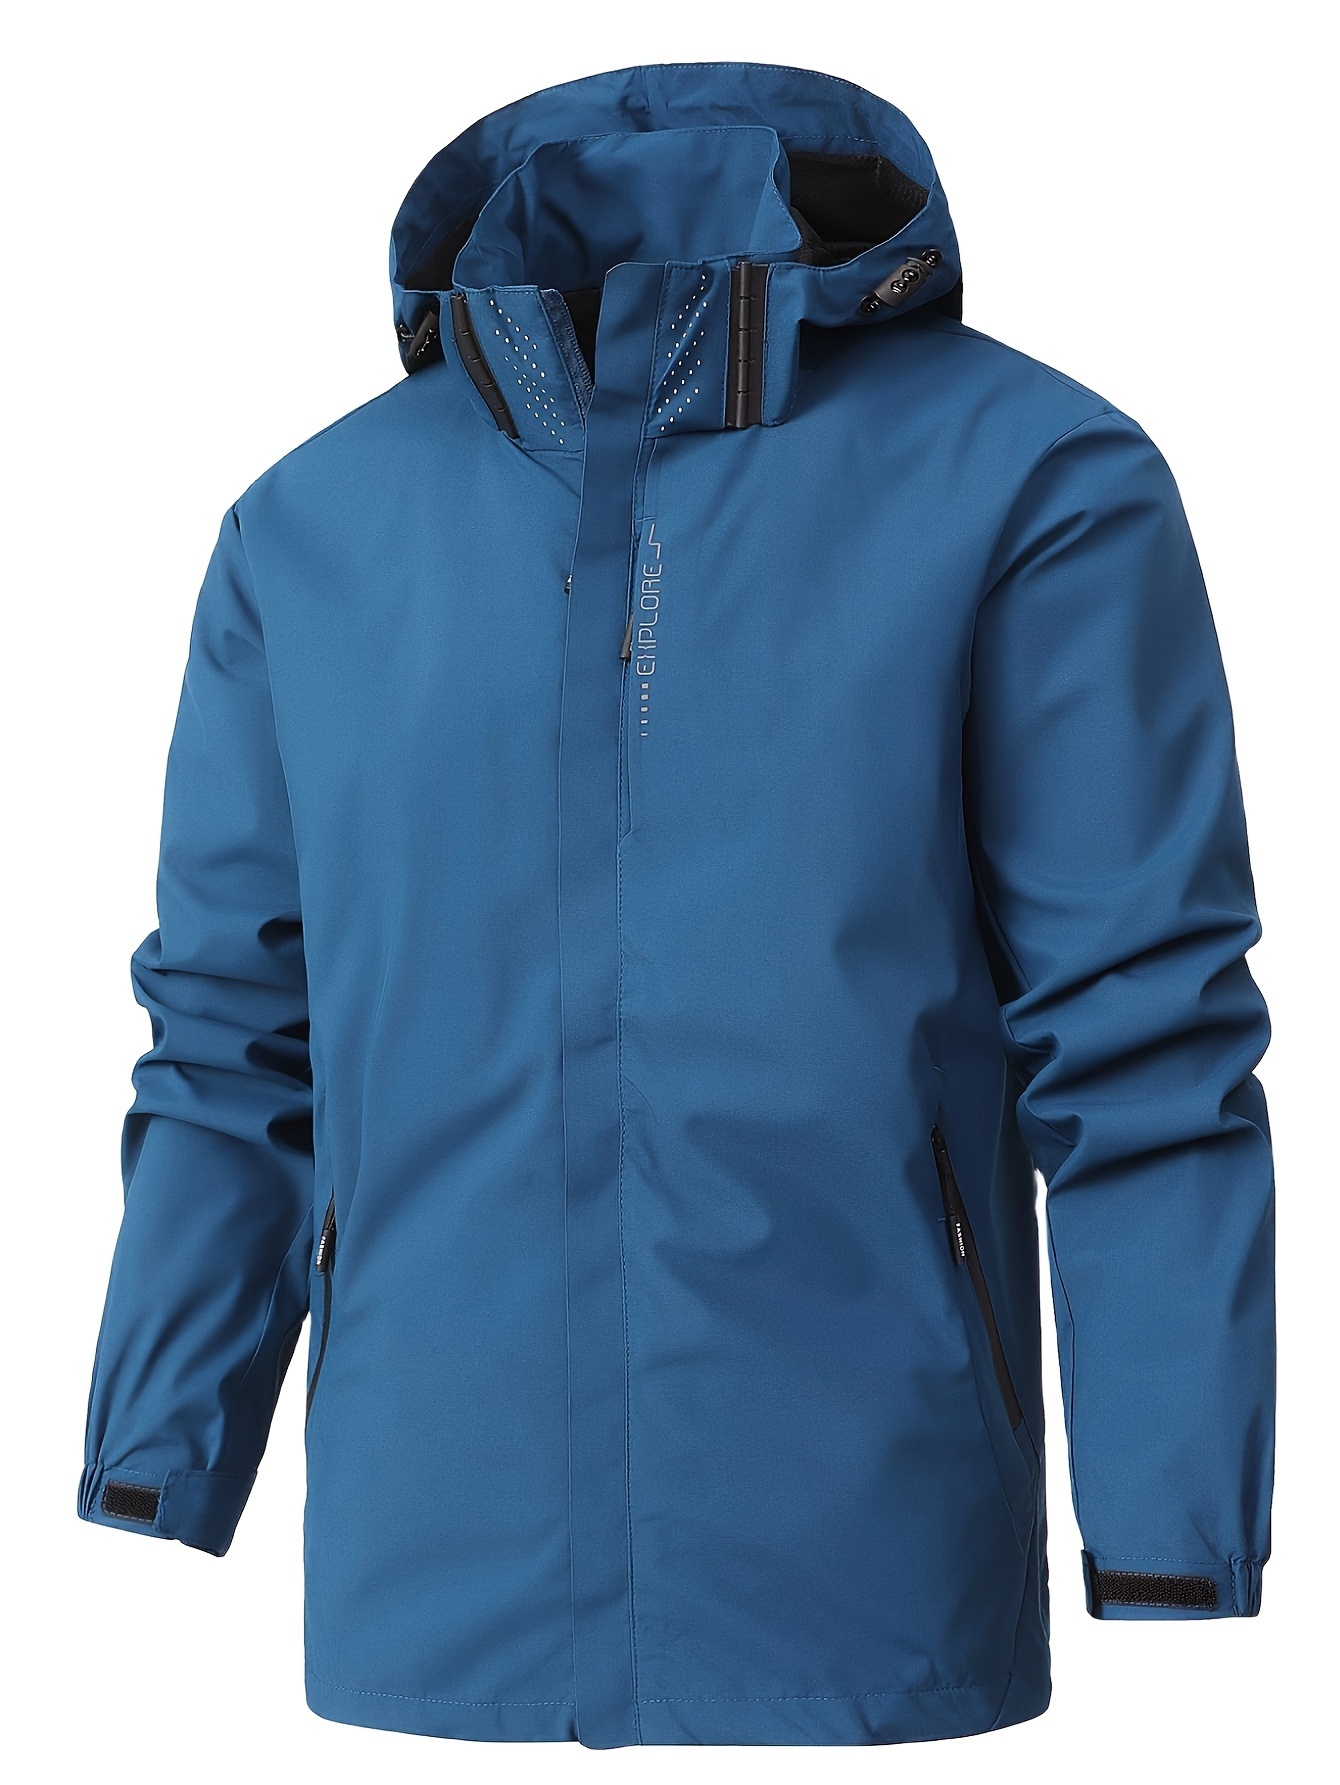 Men's Rain Jackets, Coats & Shells: Lightweight & Waterproof